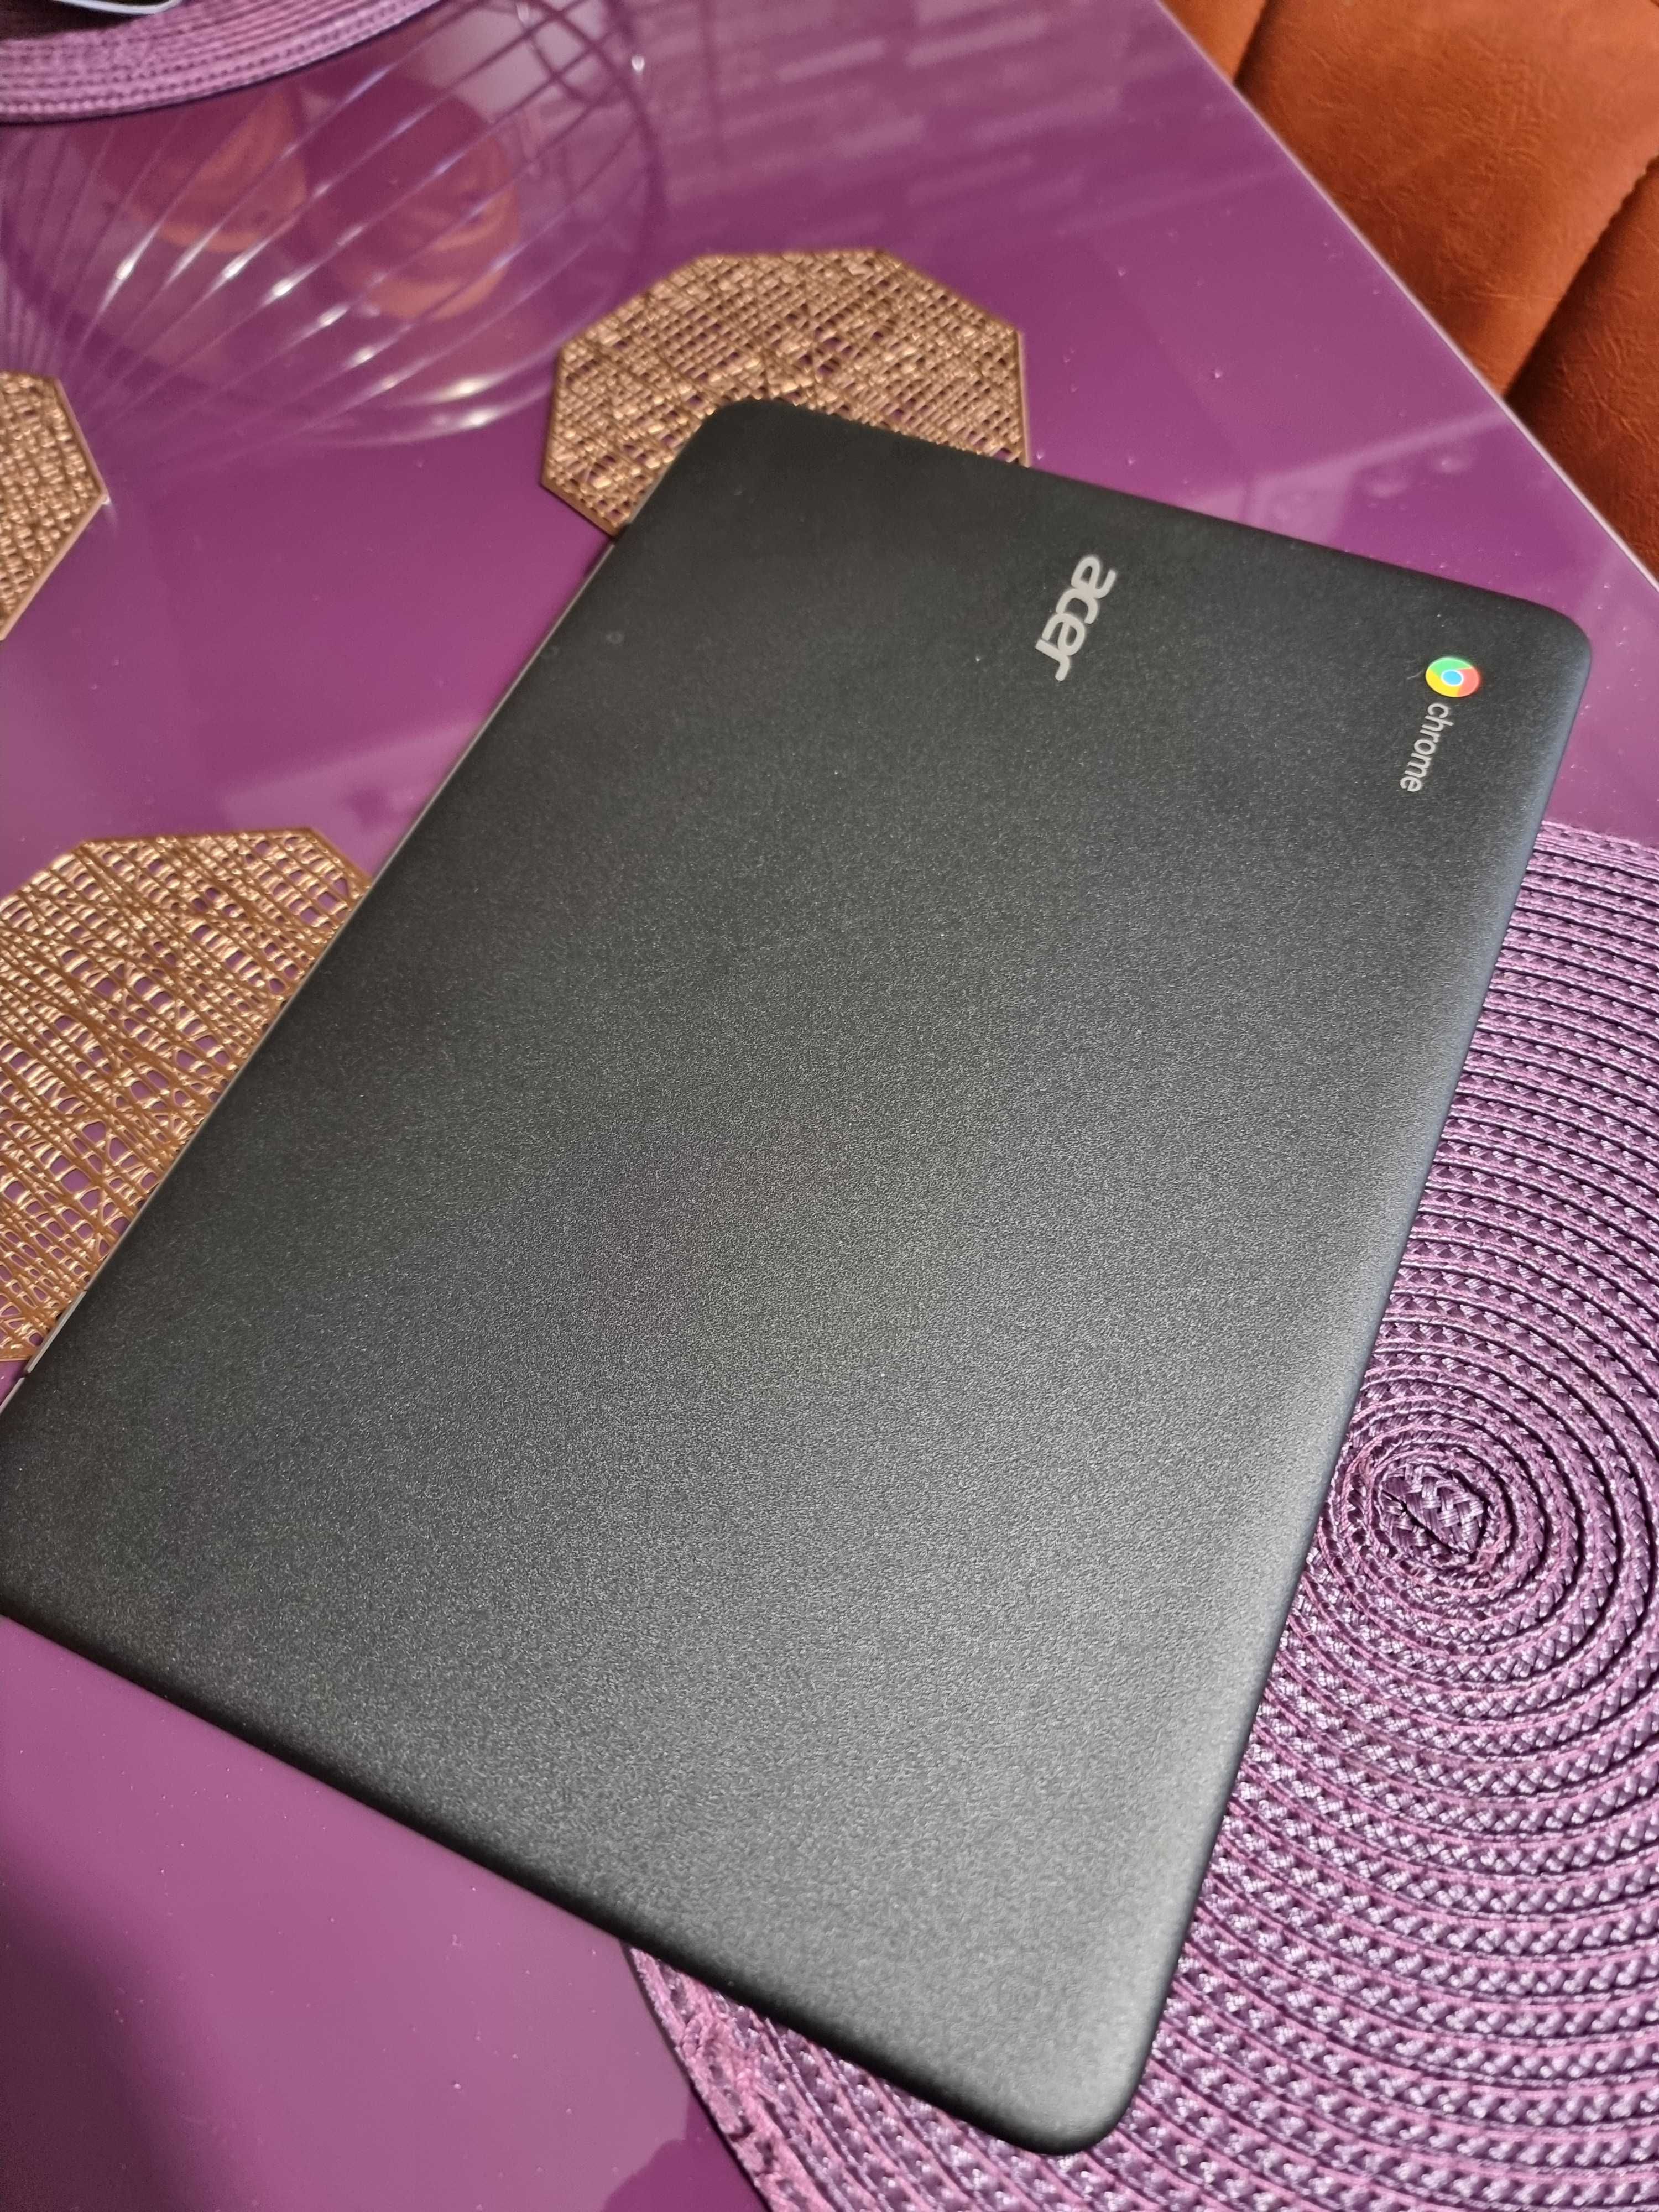 Chromebook Acer C733 series